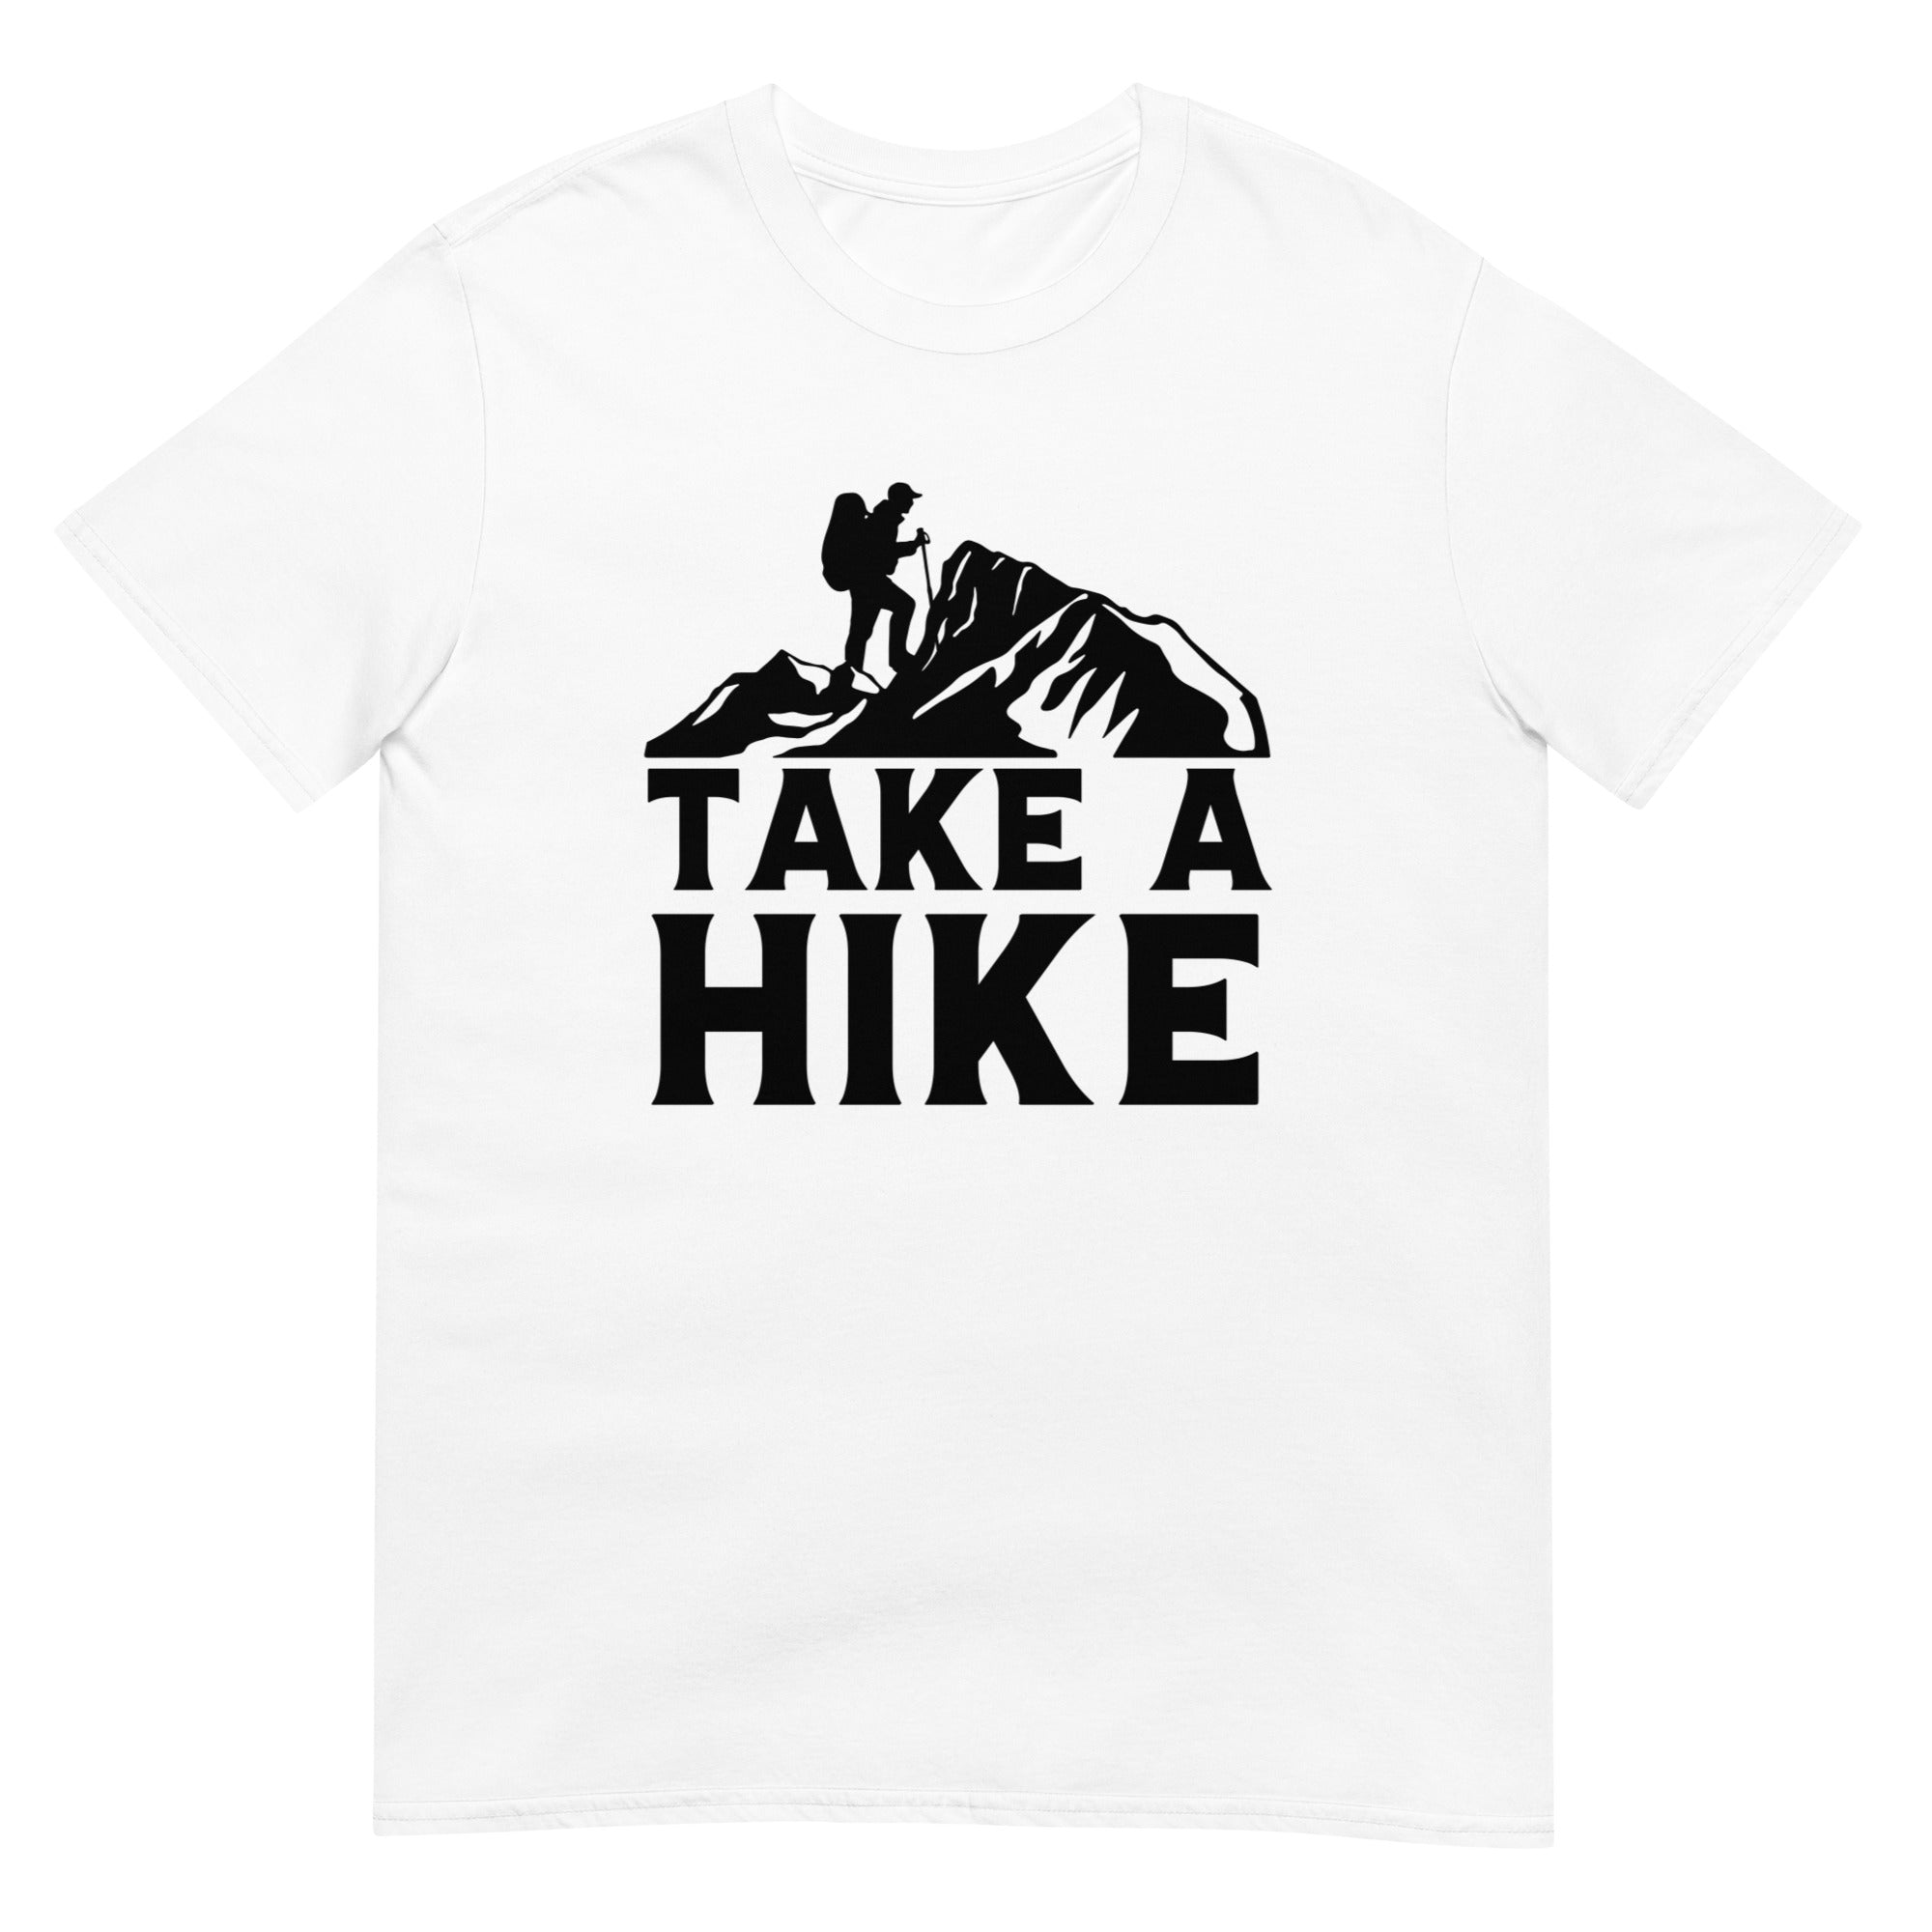 Take A Hike - Short-Sleeve Unisex T-Shirt